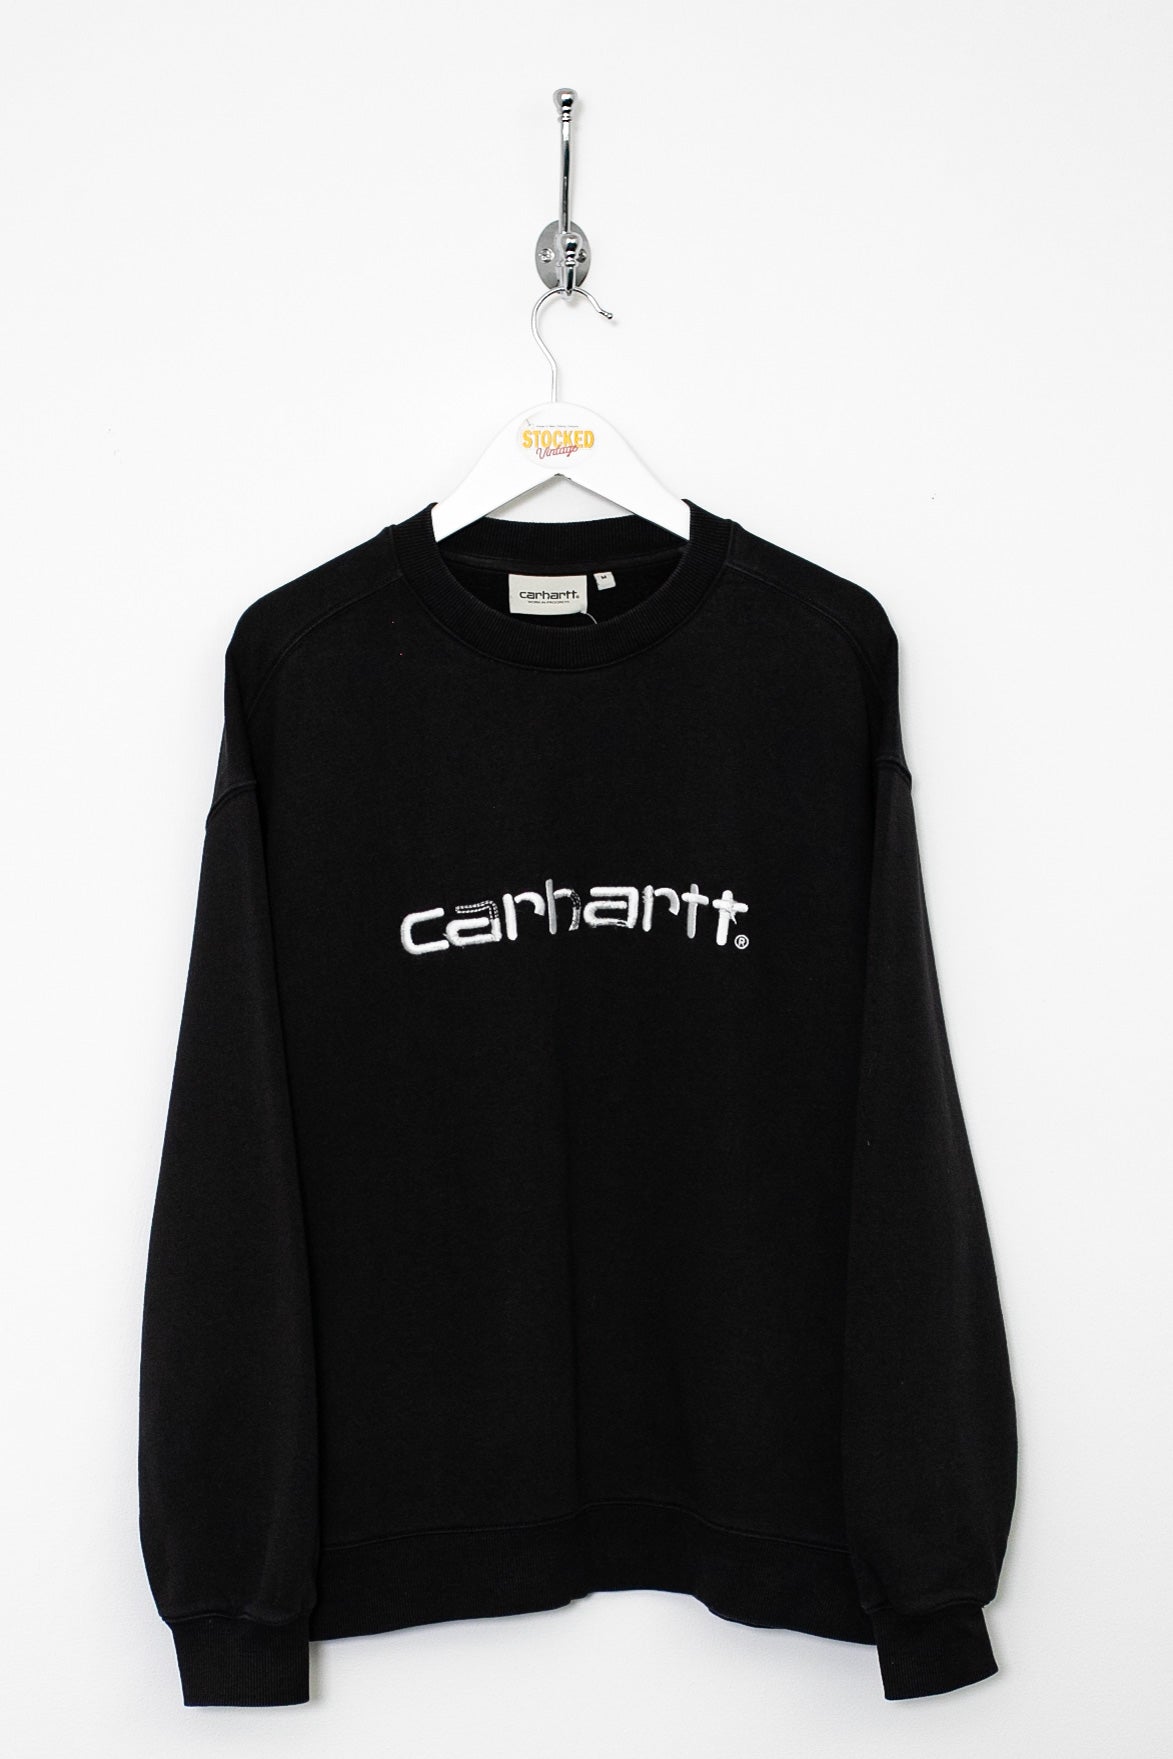 Carhartt Sweatshirt (S)